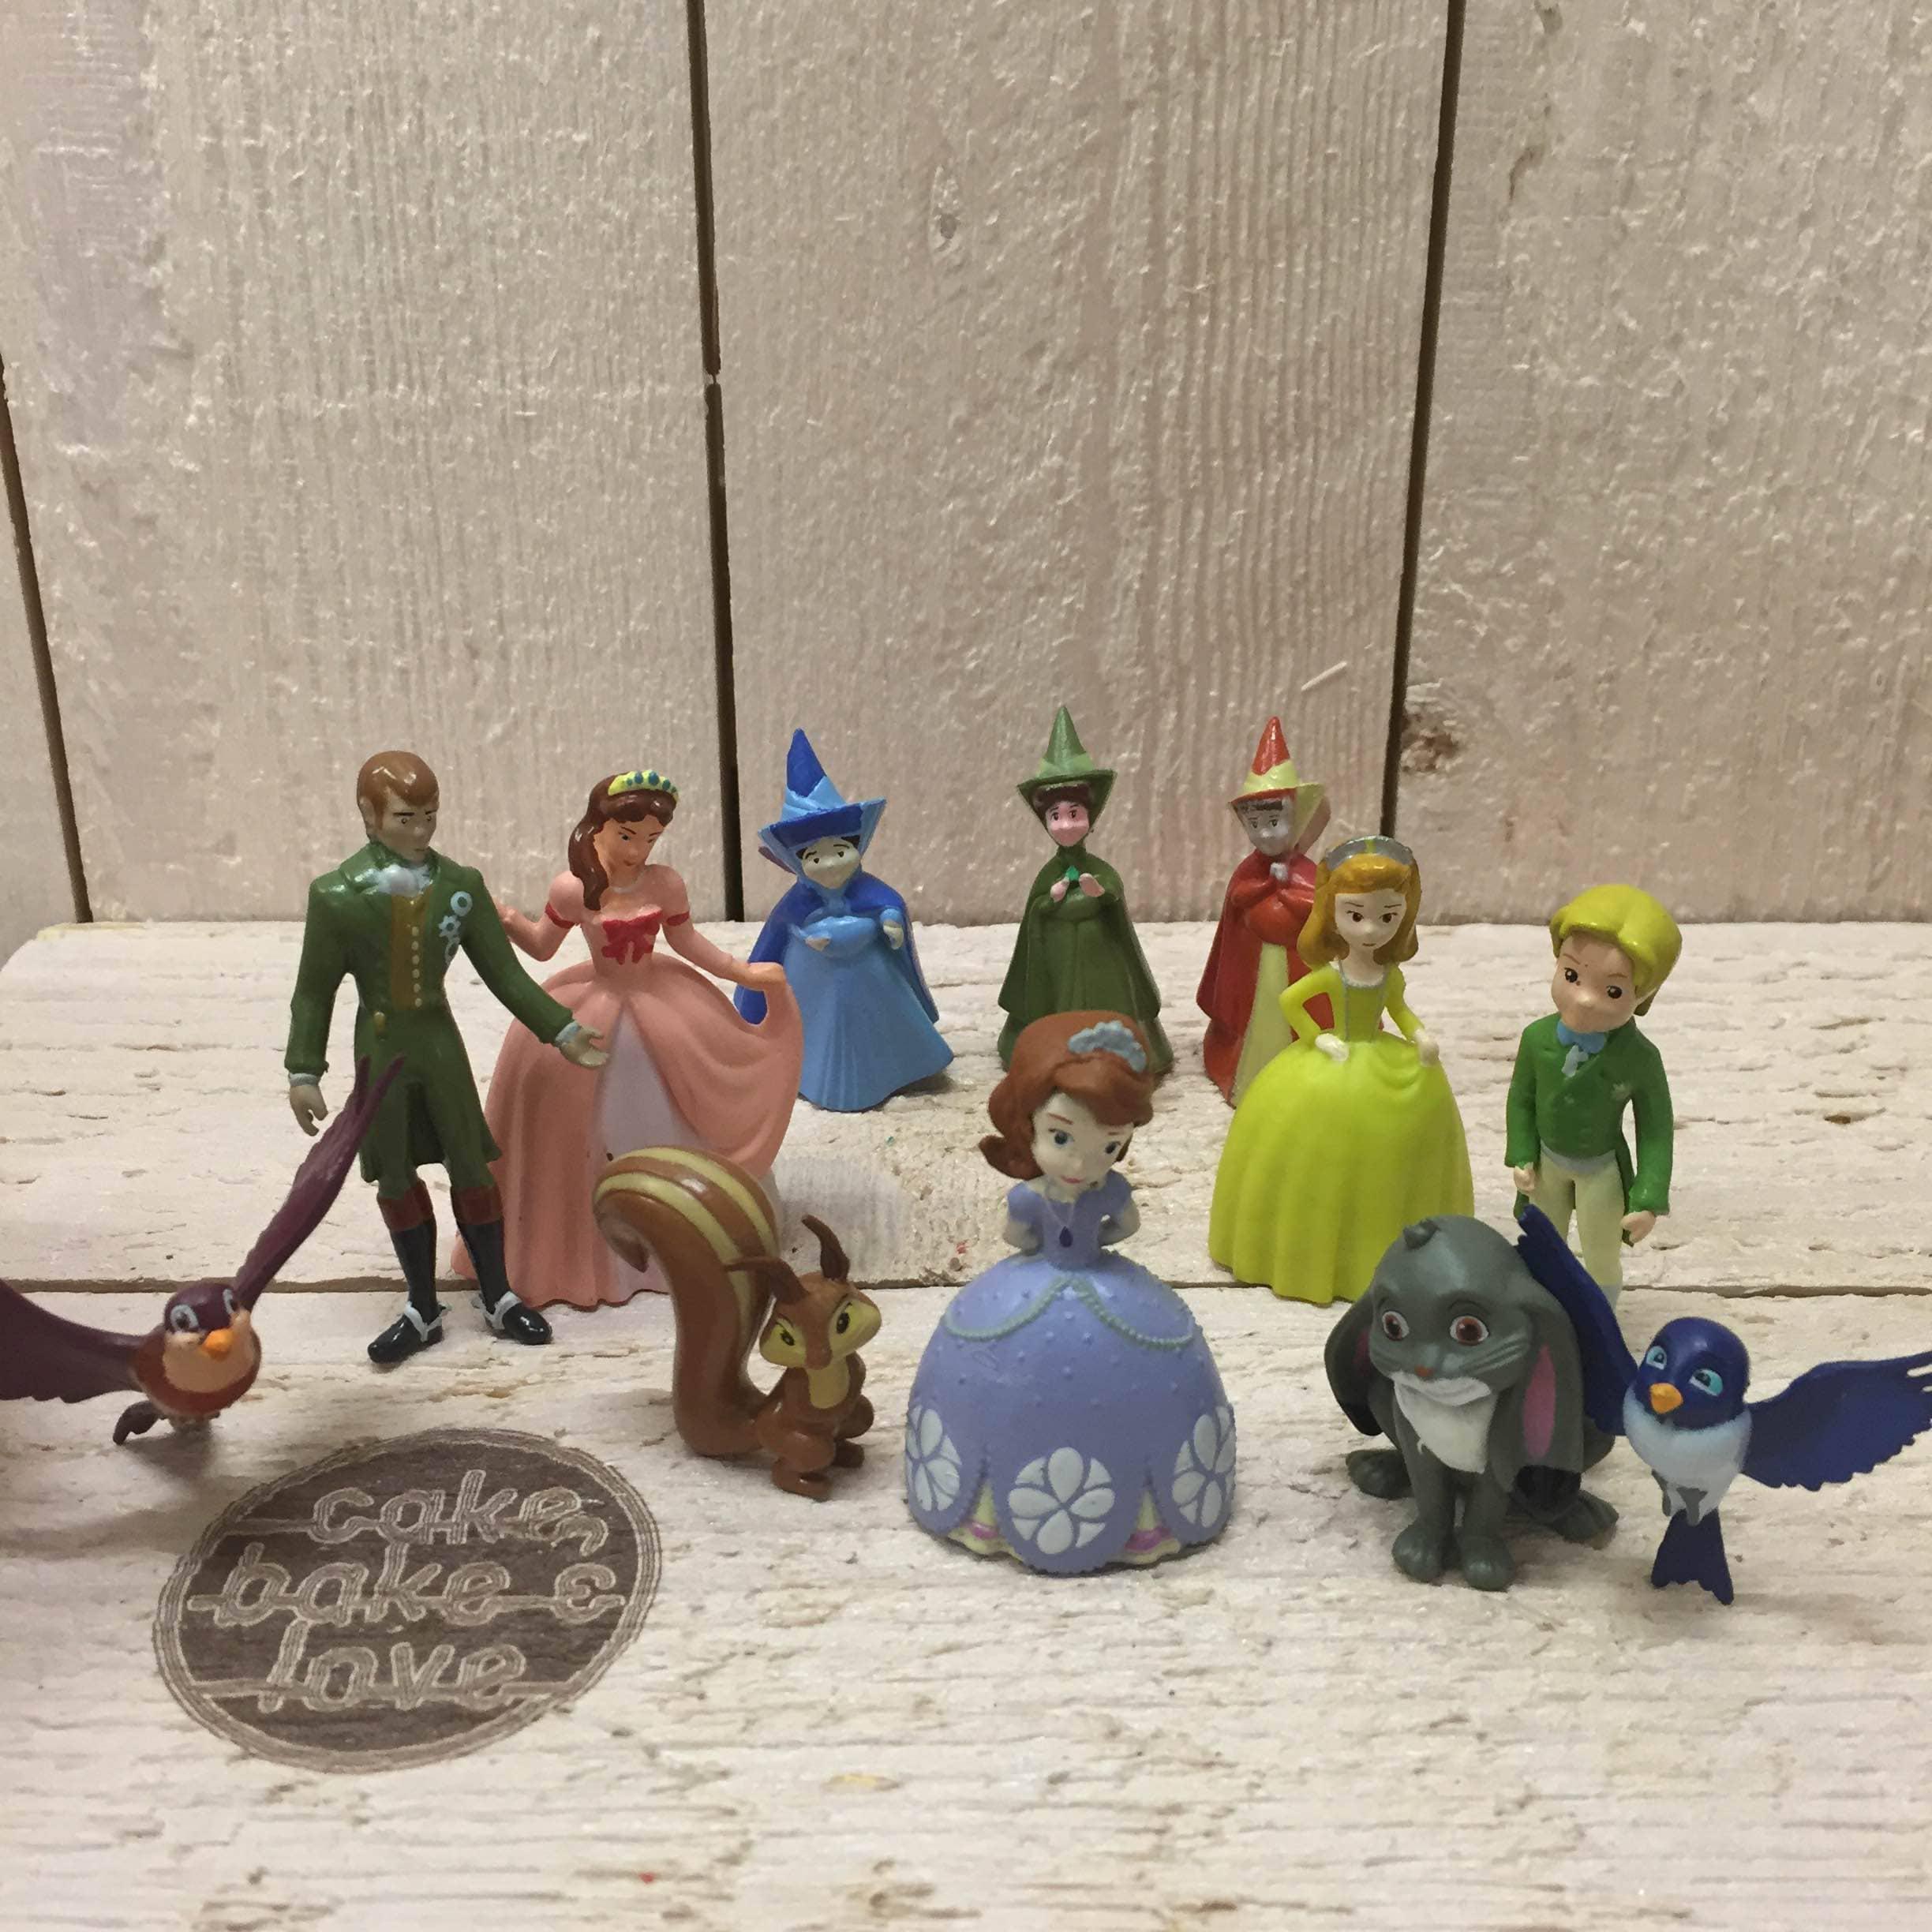 Plotselinge afdaling Bedienen Scarp Bestel Plastic decoratieset Prinses Sofia bij Cake, Bake & Love